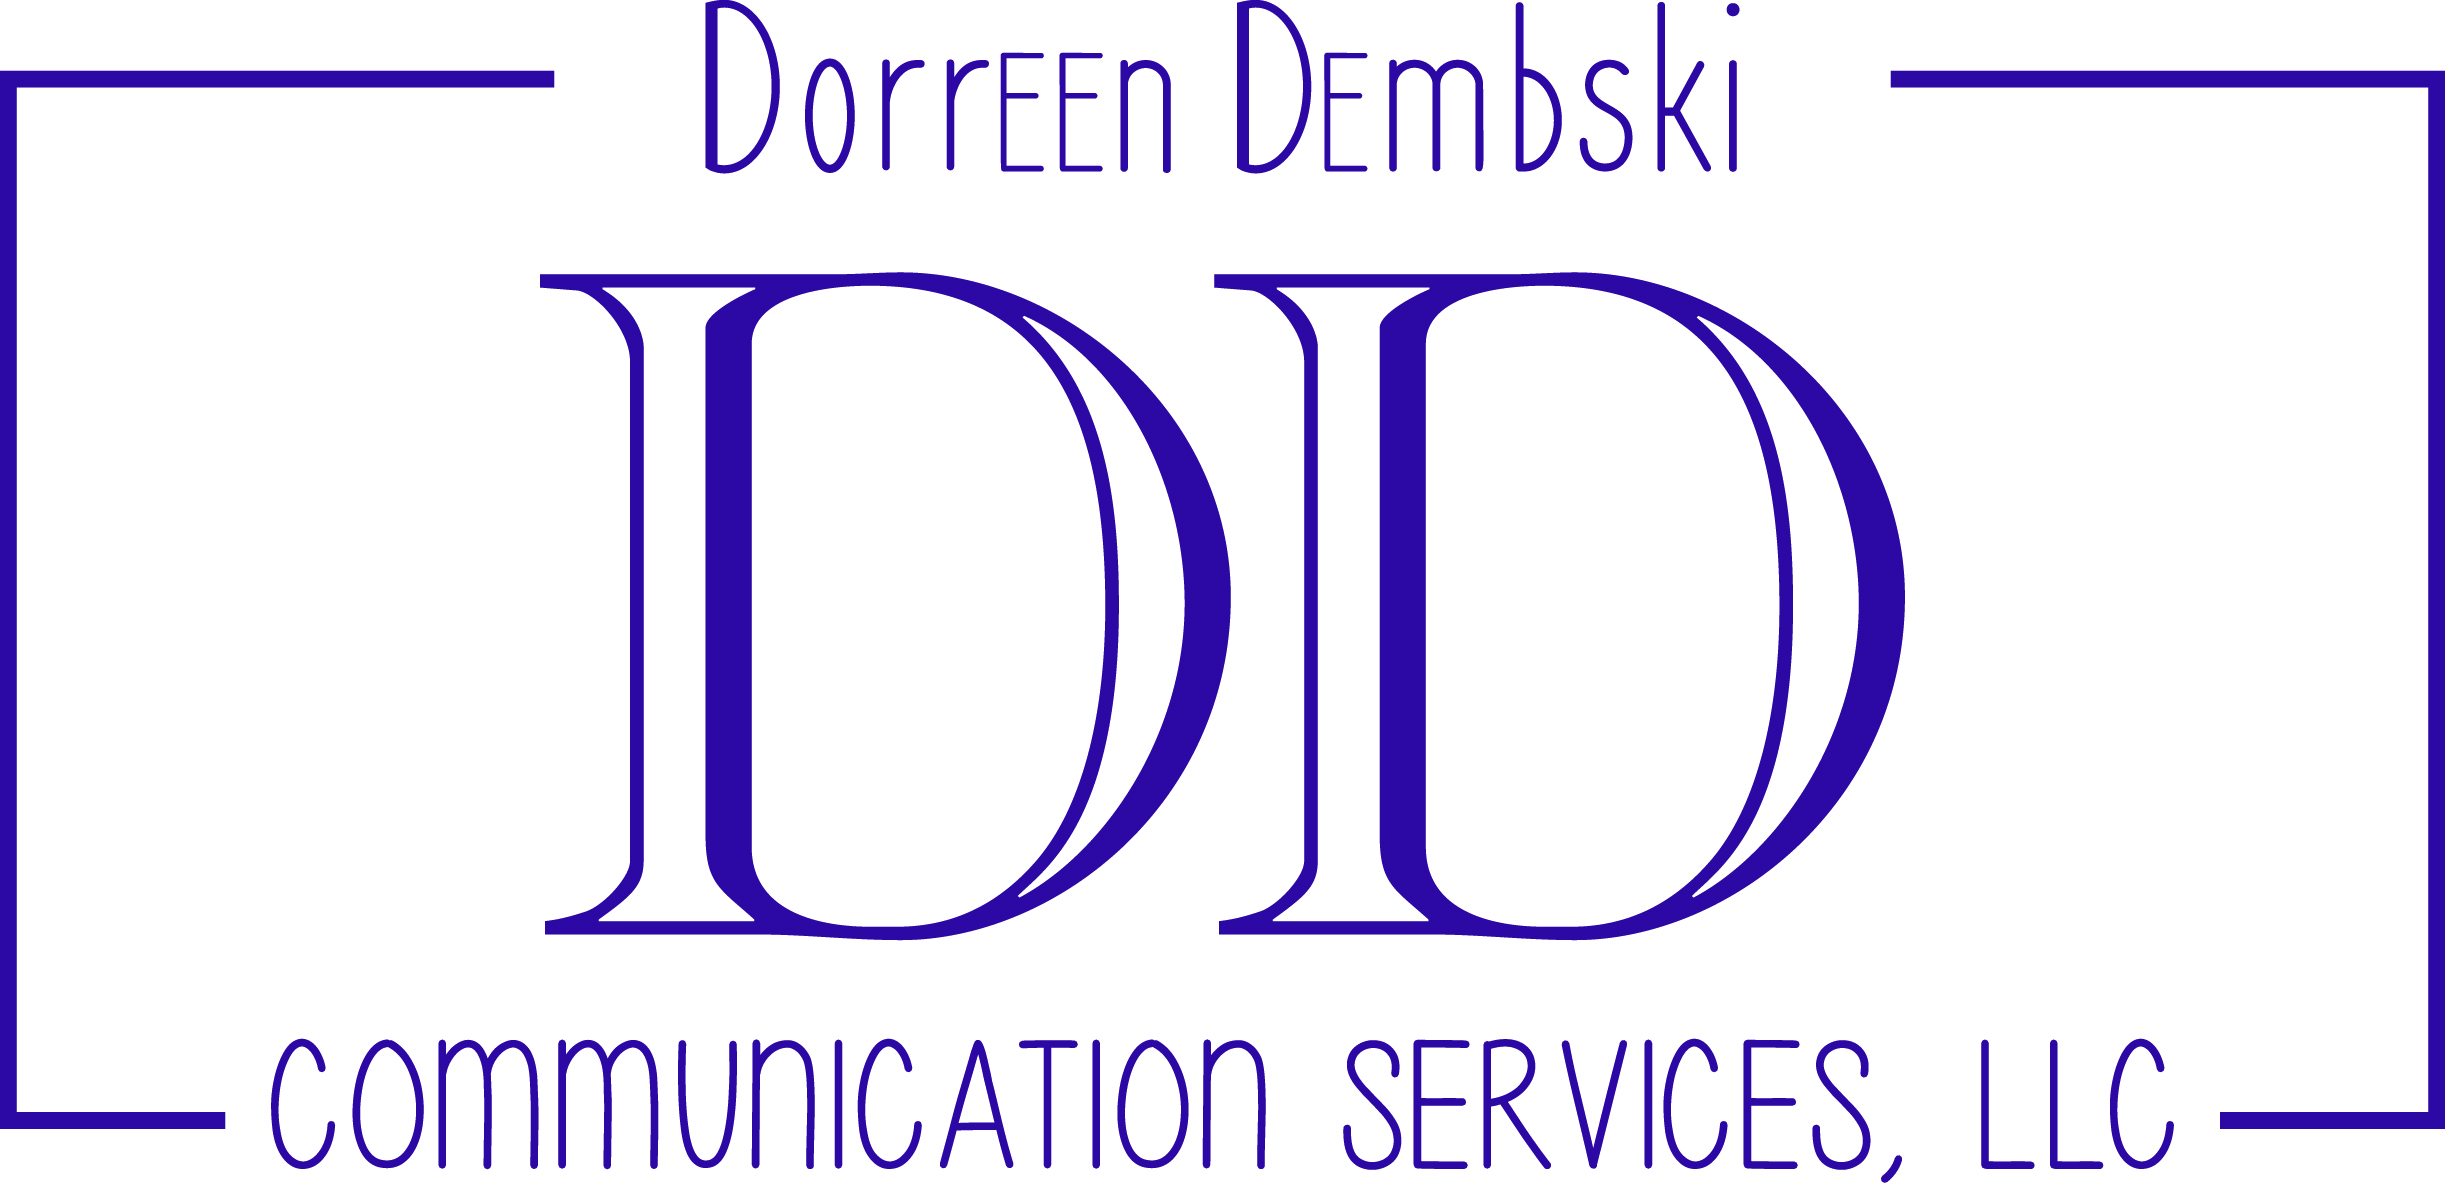 Dorreen Dembski logo